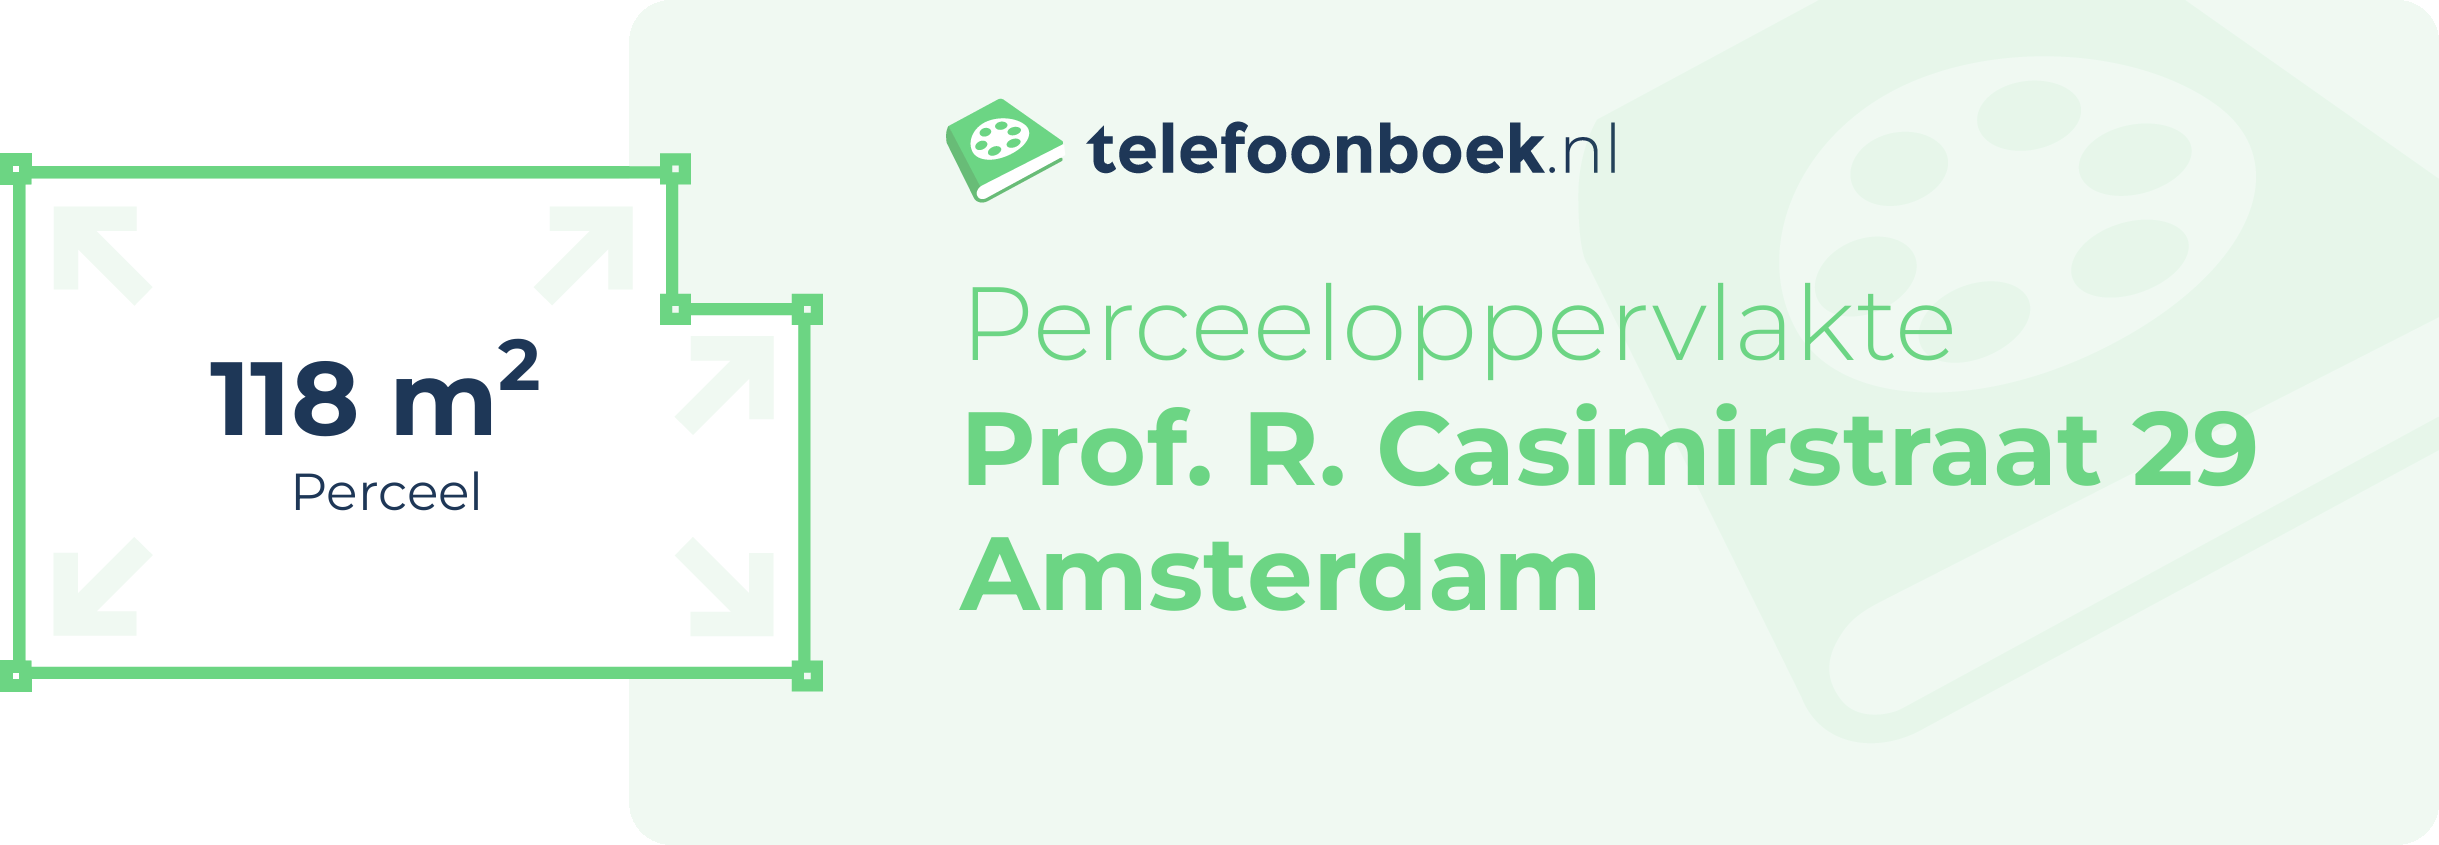 Perceeloppervlakte Prof. R. Casimirstraat 29 Amsterdam